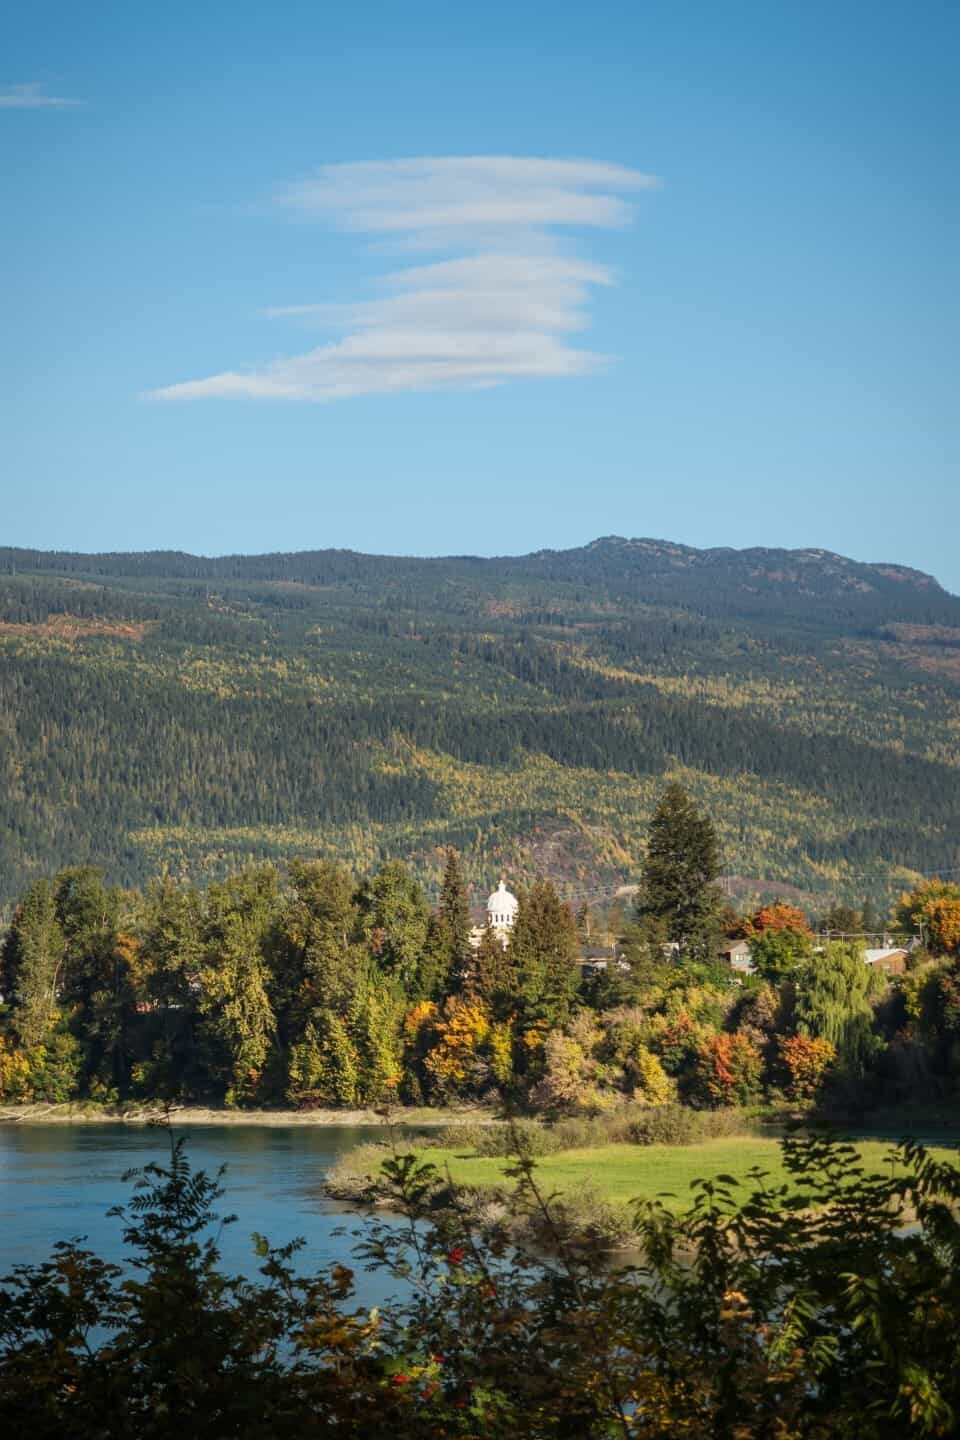 Revelstoke, Canada - Kootenay Rockies, British Columbia guide to Golden and Revelstoke